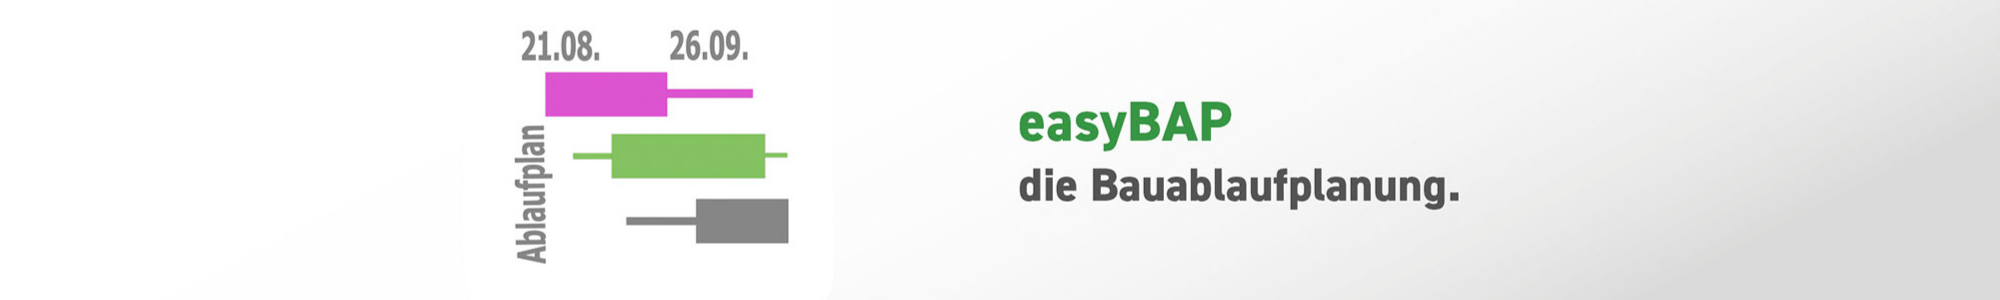 easyBAP - isl-kocher GmbH